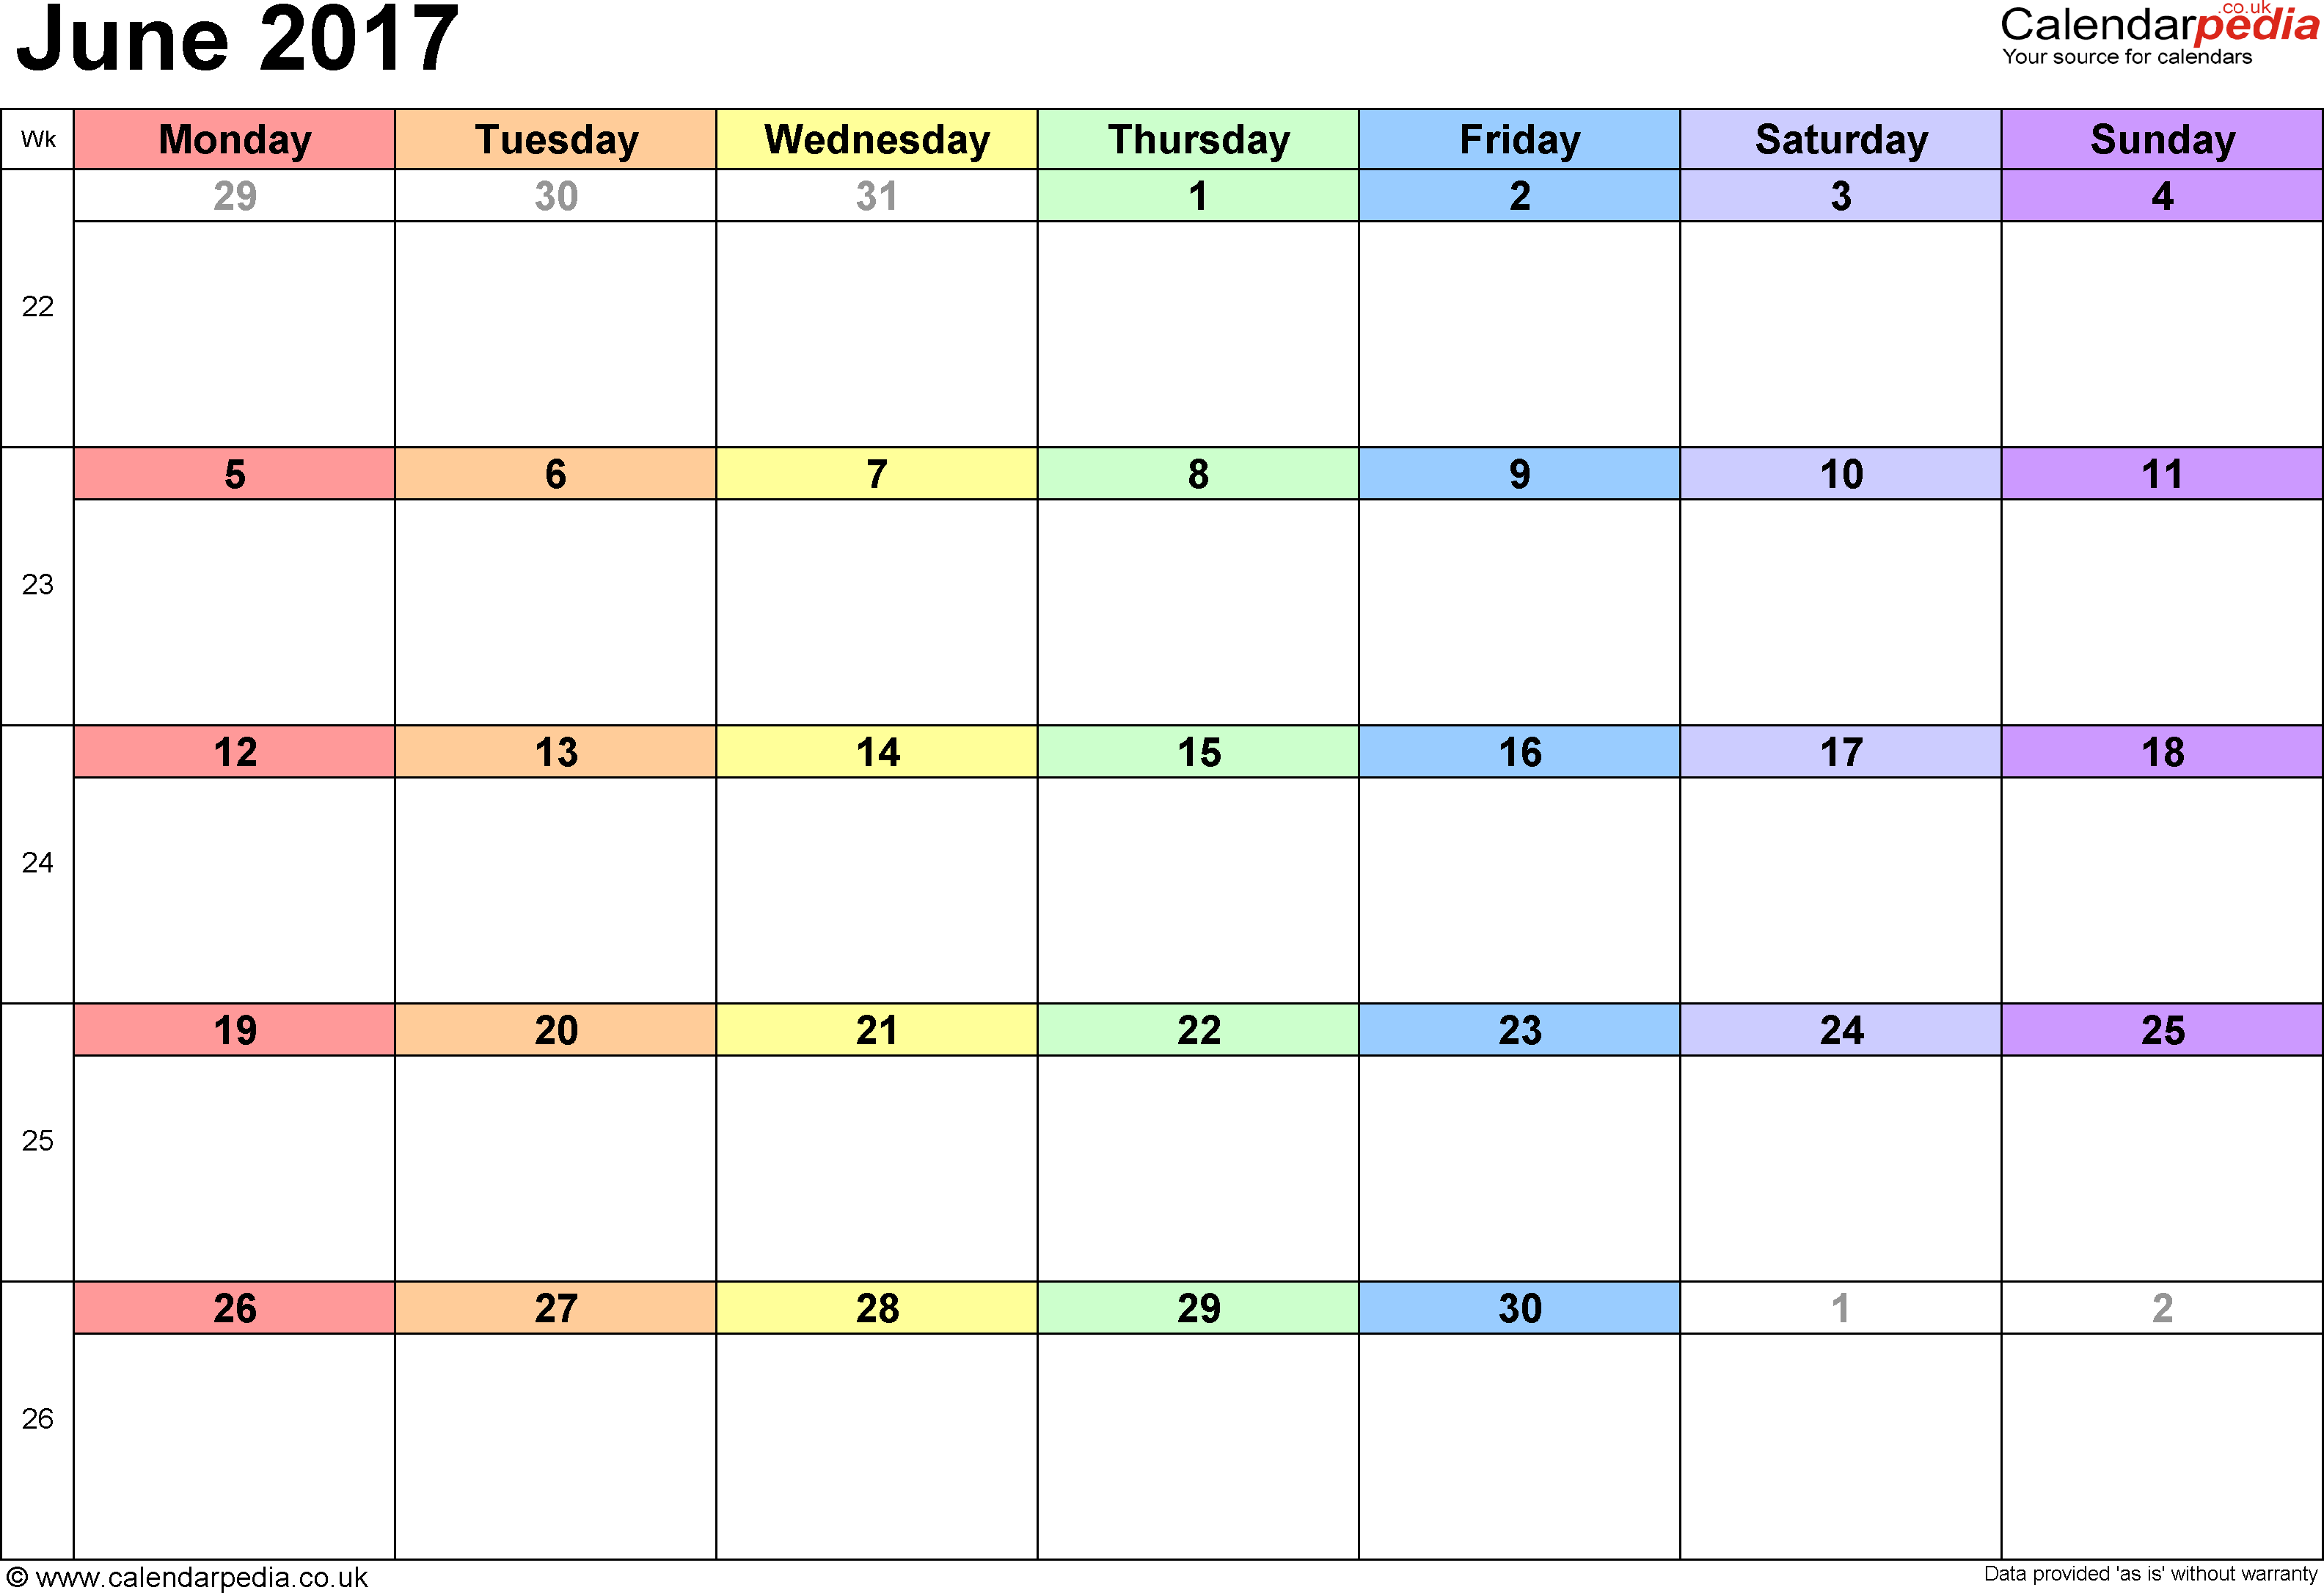 Calendar June 2017 UK, Bank Holidays, Excel/PDF/Word Templates